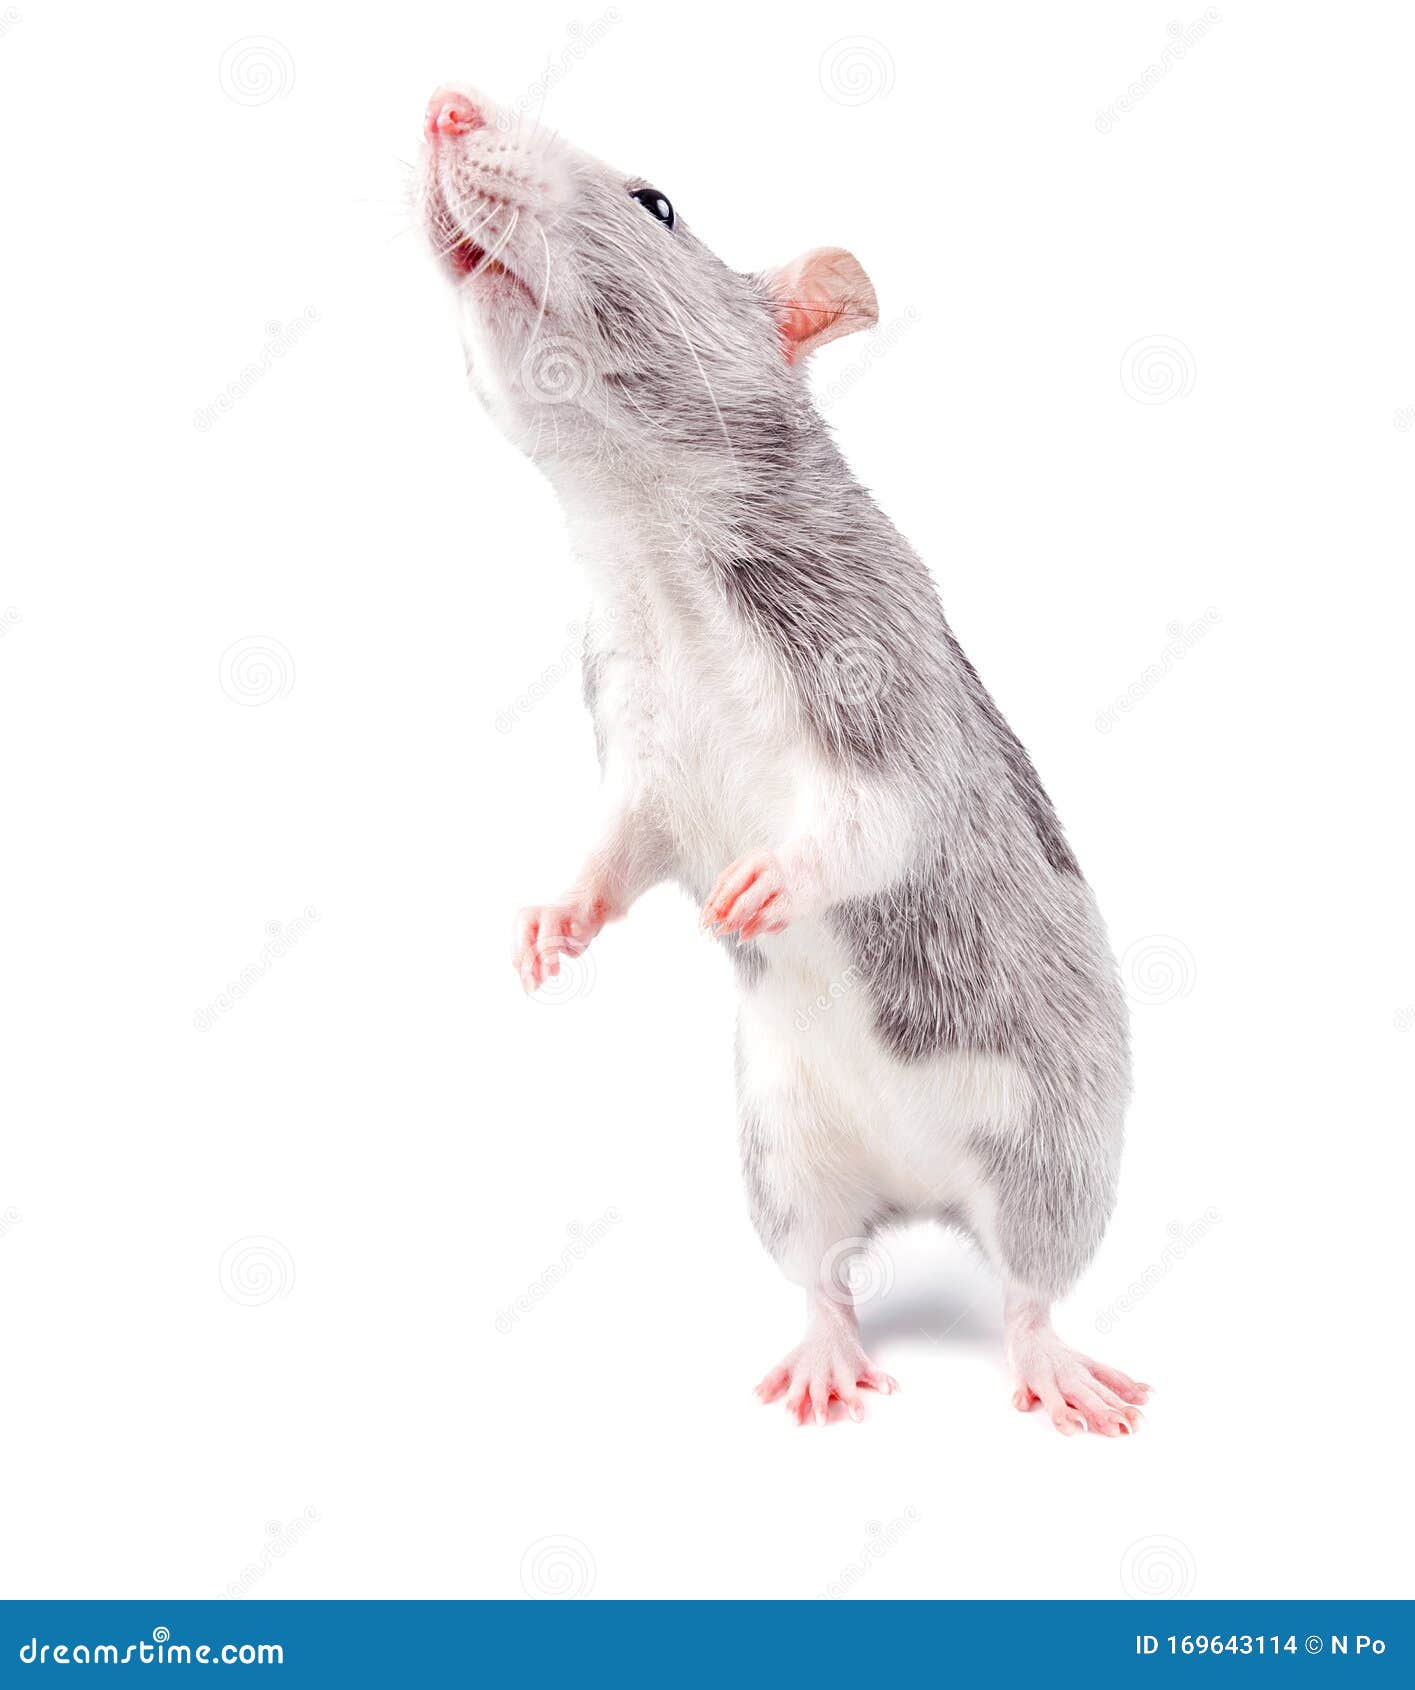 Rato no banheiro sobe na perna da pessoa